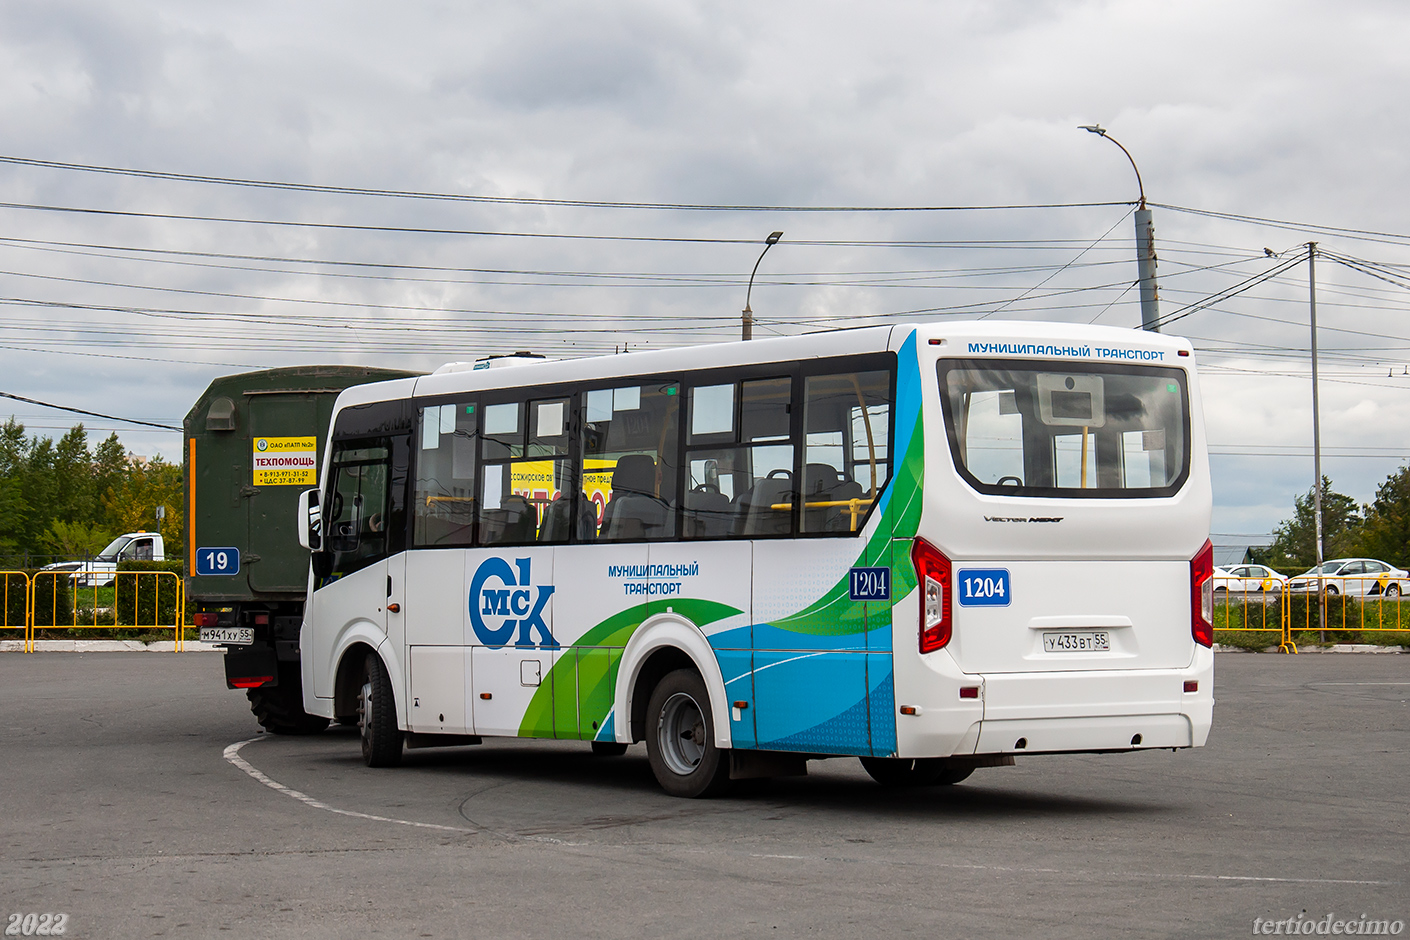 Obwód omski, PAZ-320435-04 "Vector Next" Nr 1204; Obwód omski — 19.08.2022 — XXIII City competition of professional skills of bus drivers